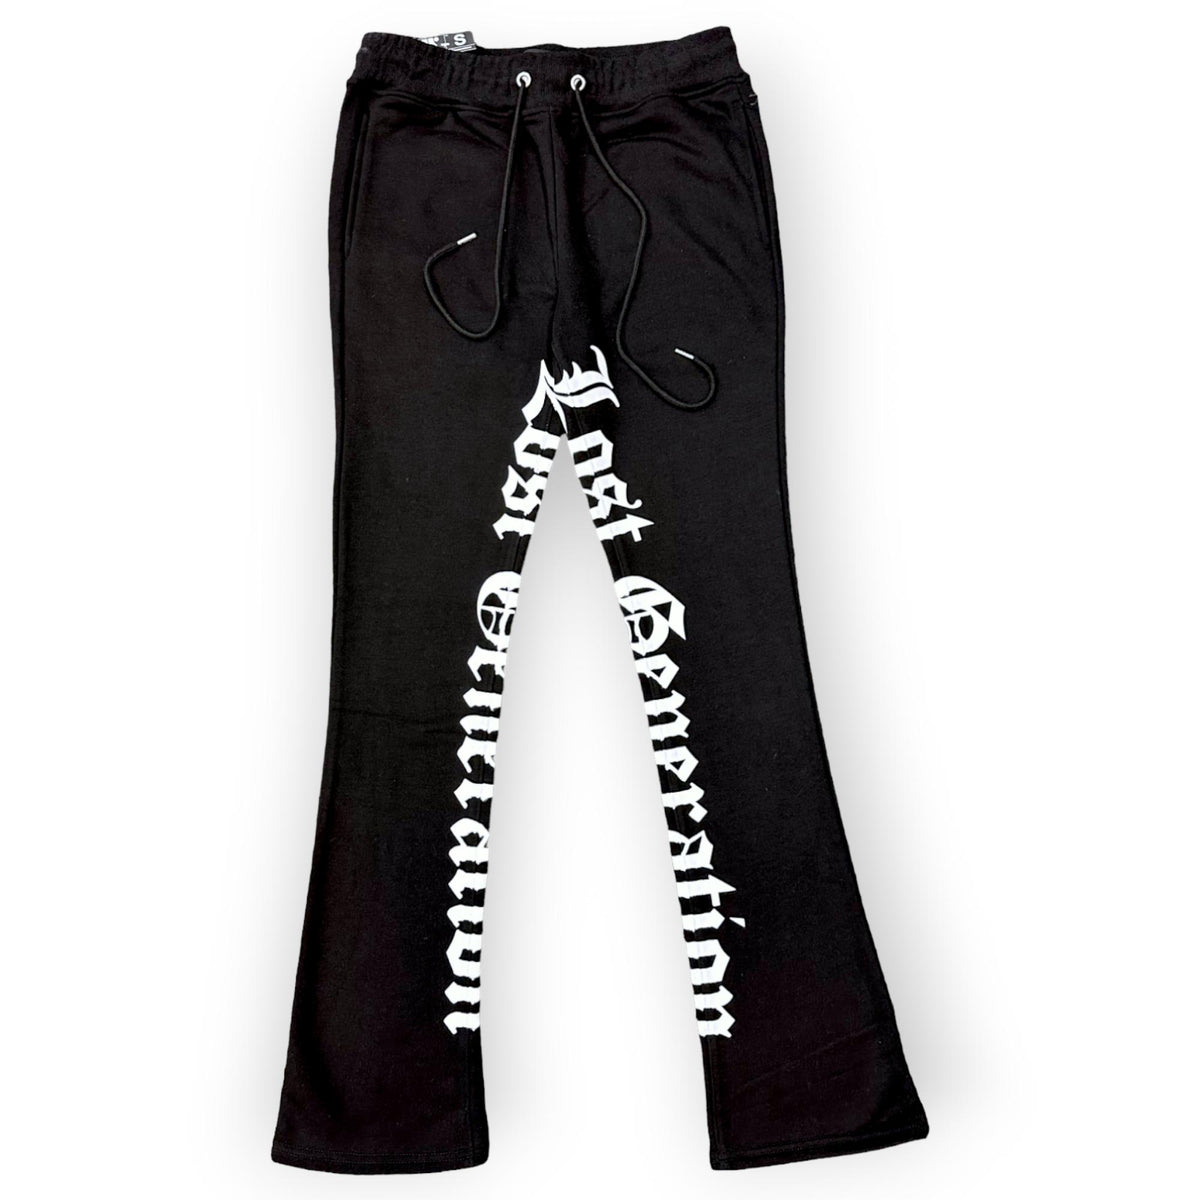 WaiMea Stacked Pants Men Lost Generation Sweatpants (Black White)